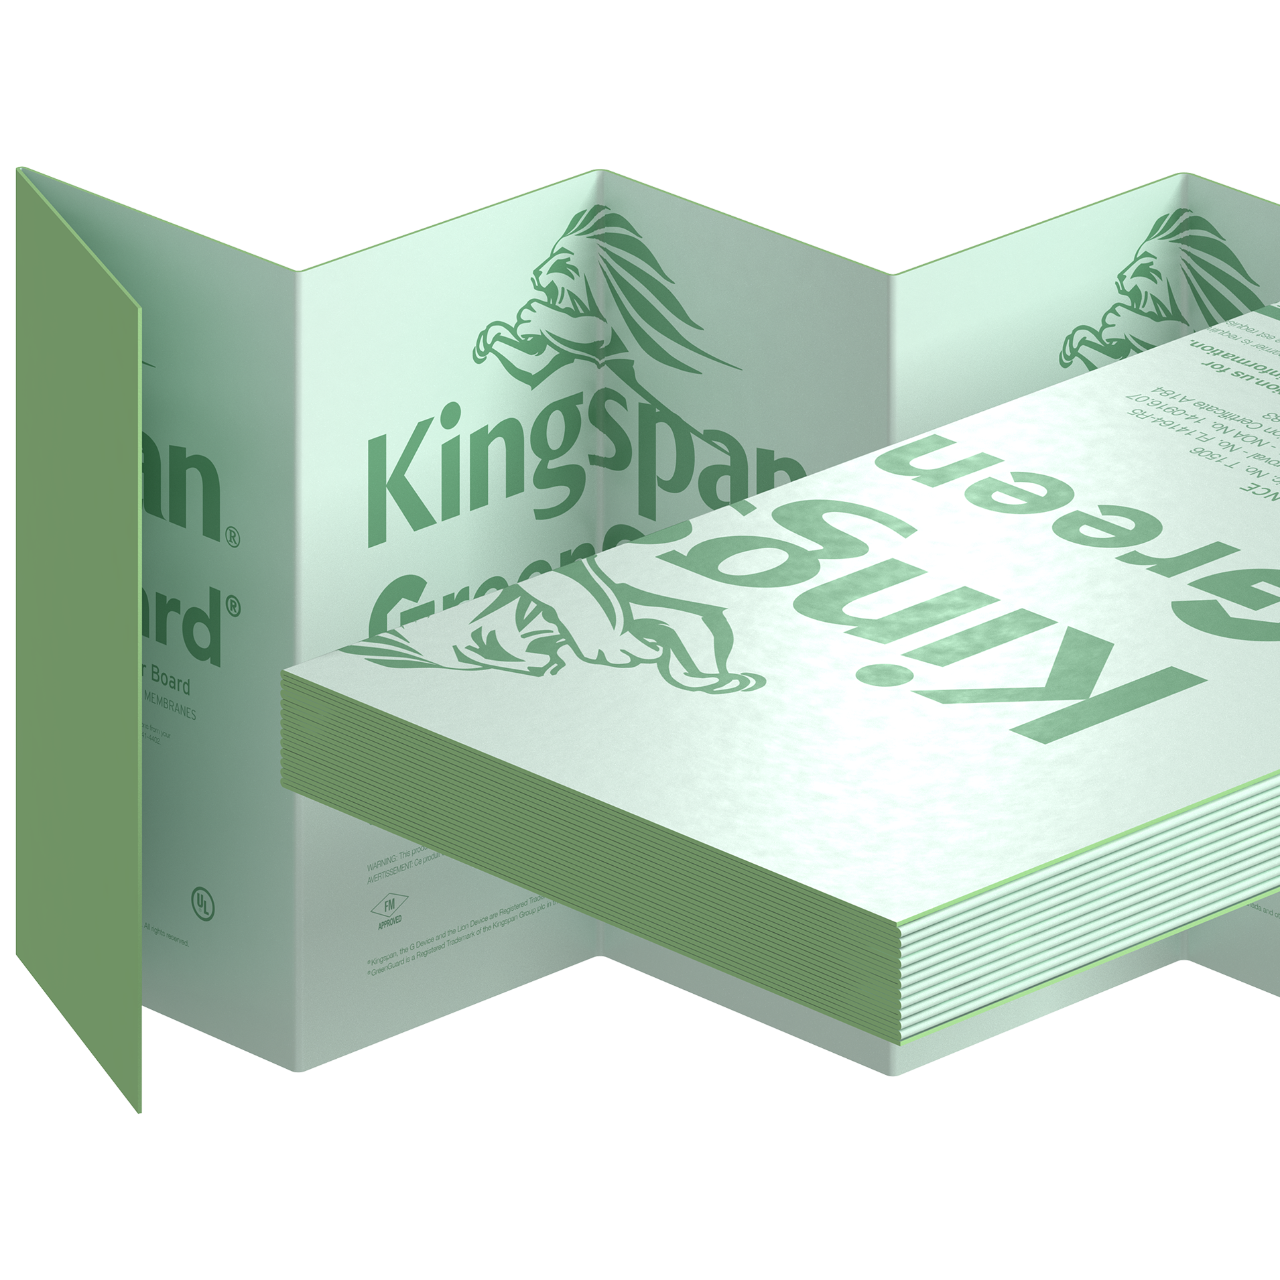 greenguard-pb6-roofing-cover-board-kingspan-ca